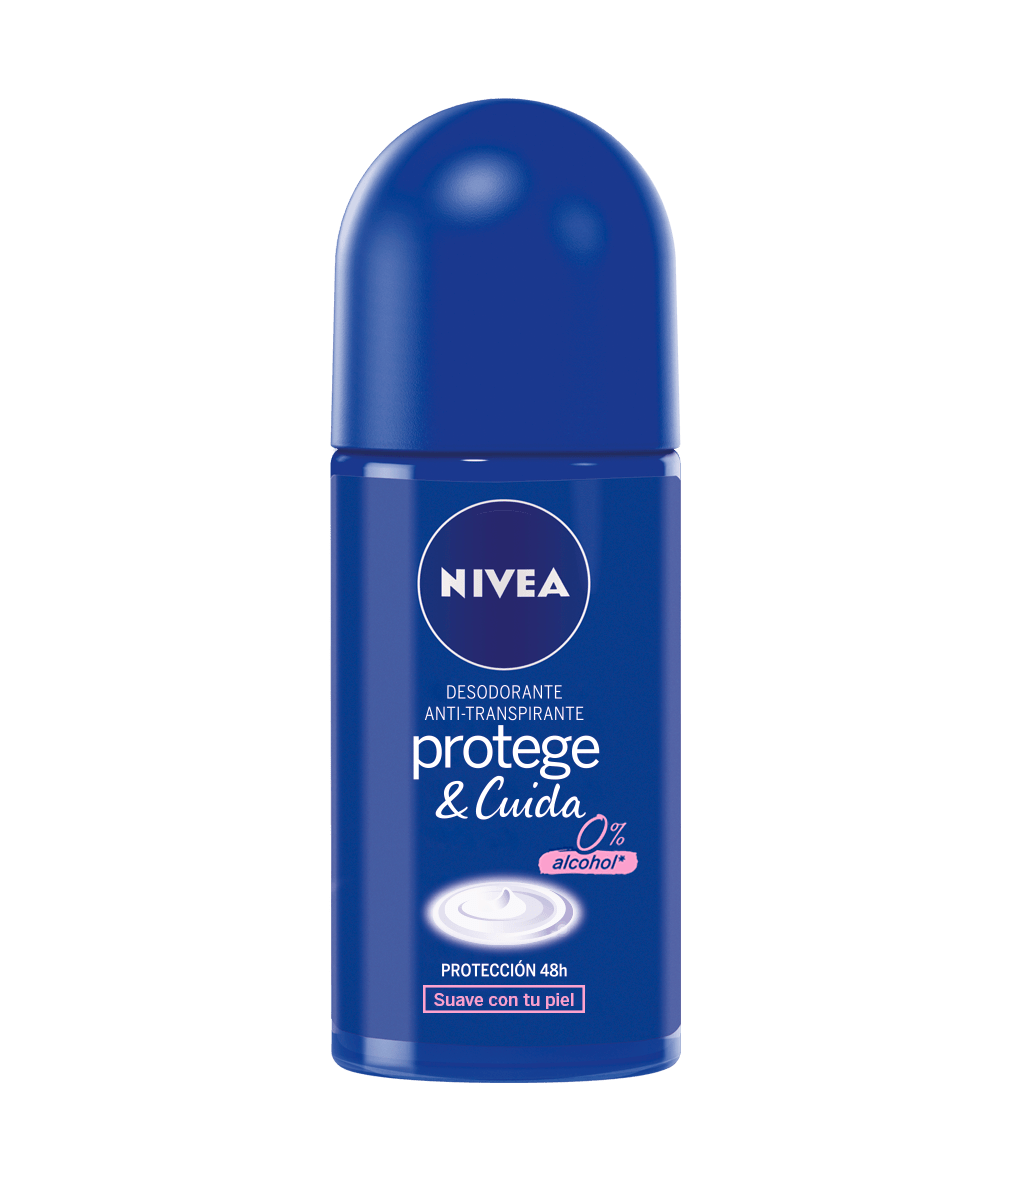 Protege & Cuida Roll-On Desodorante Antitranspirante | NIVEA